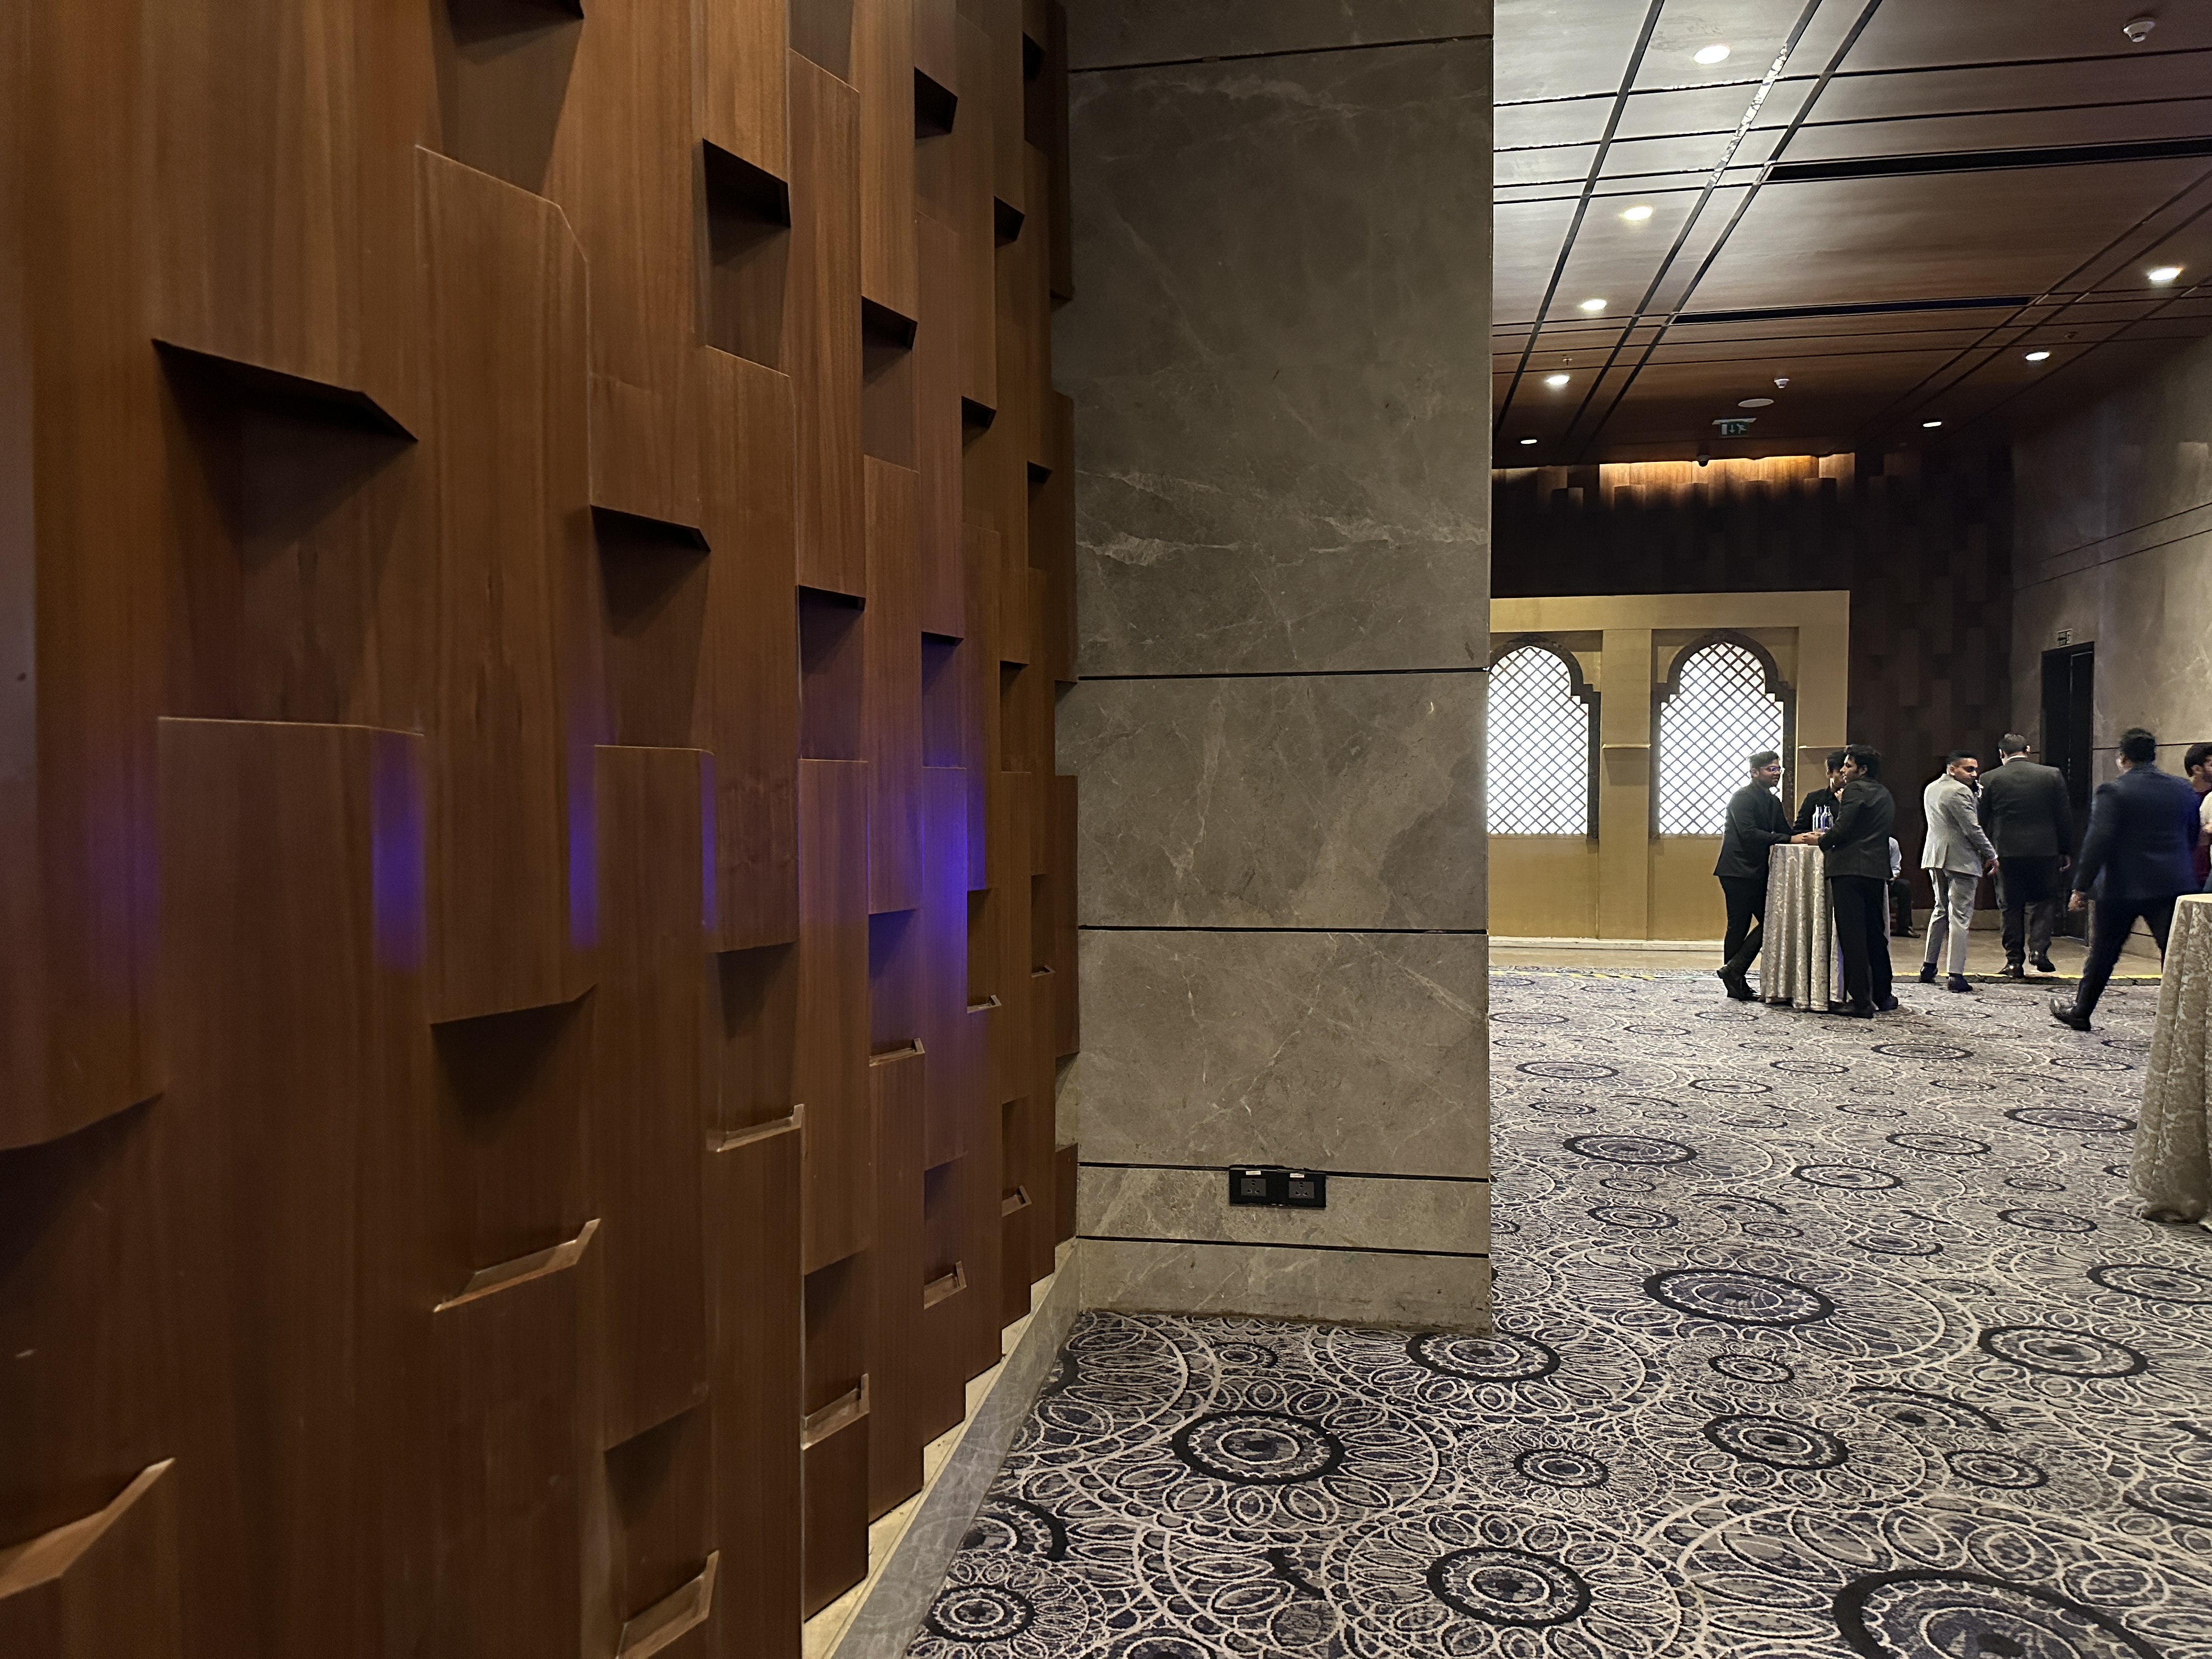 A dim lit hotel hallway captured by iPhone 14 Pro.